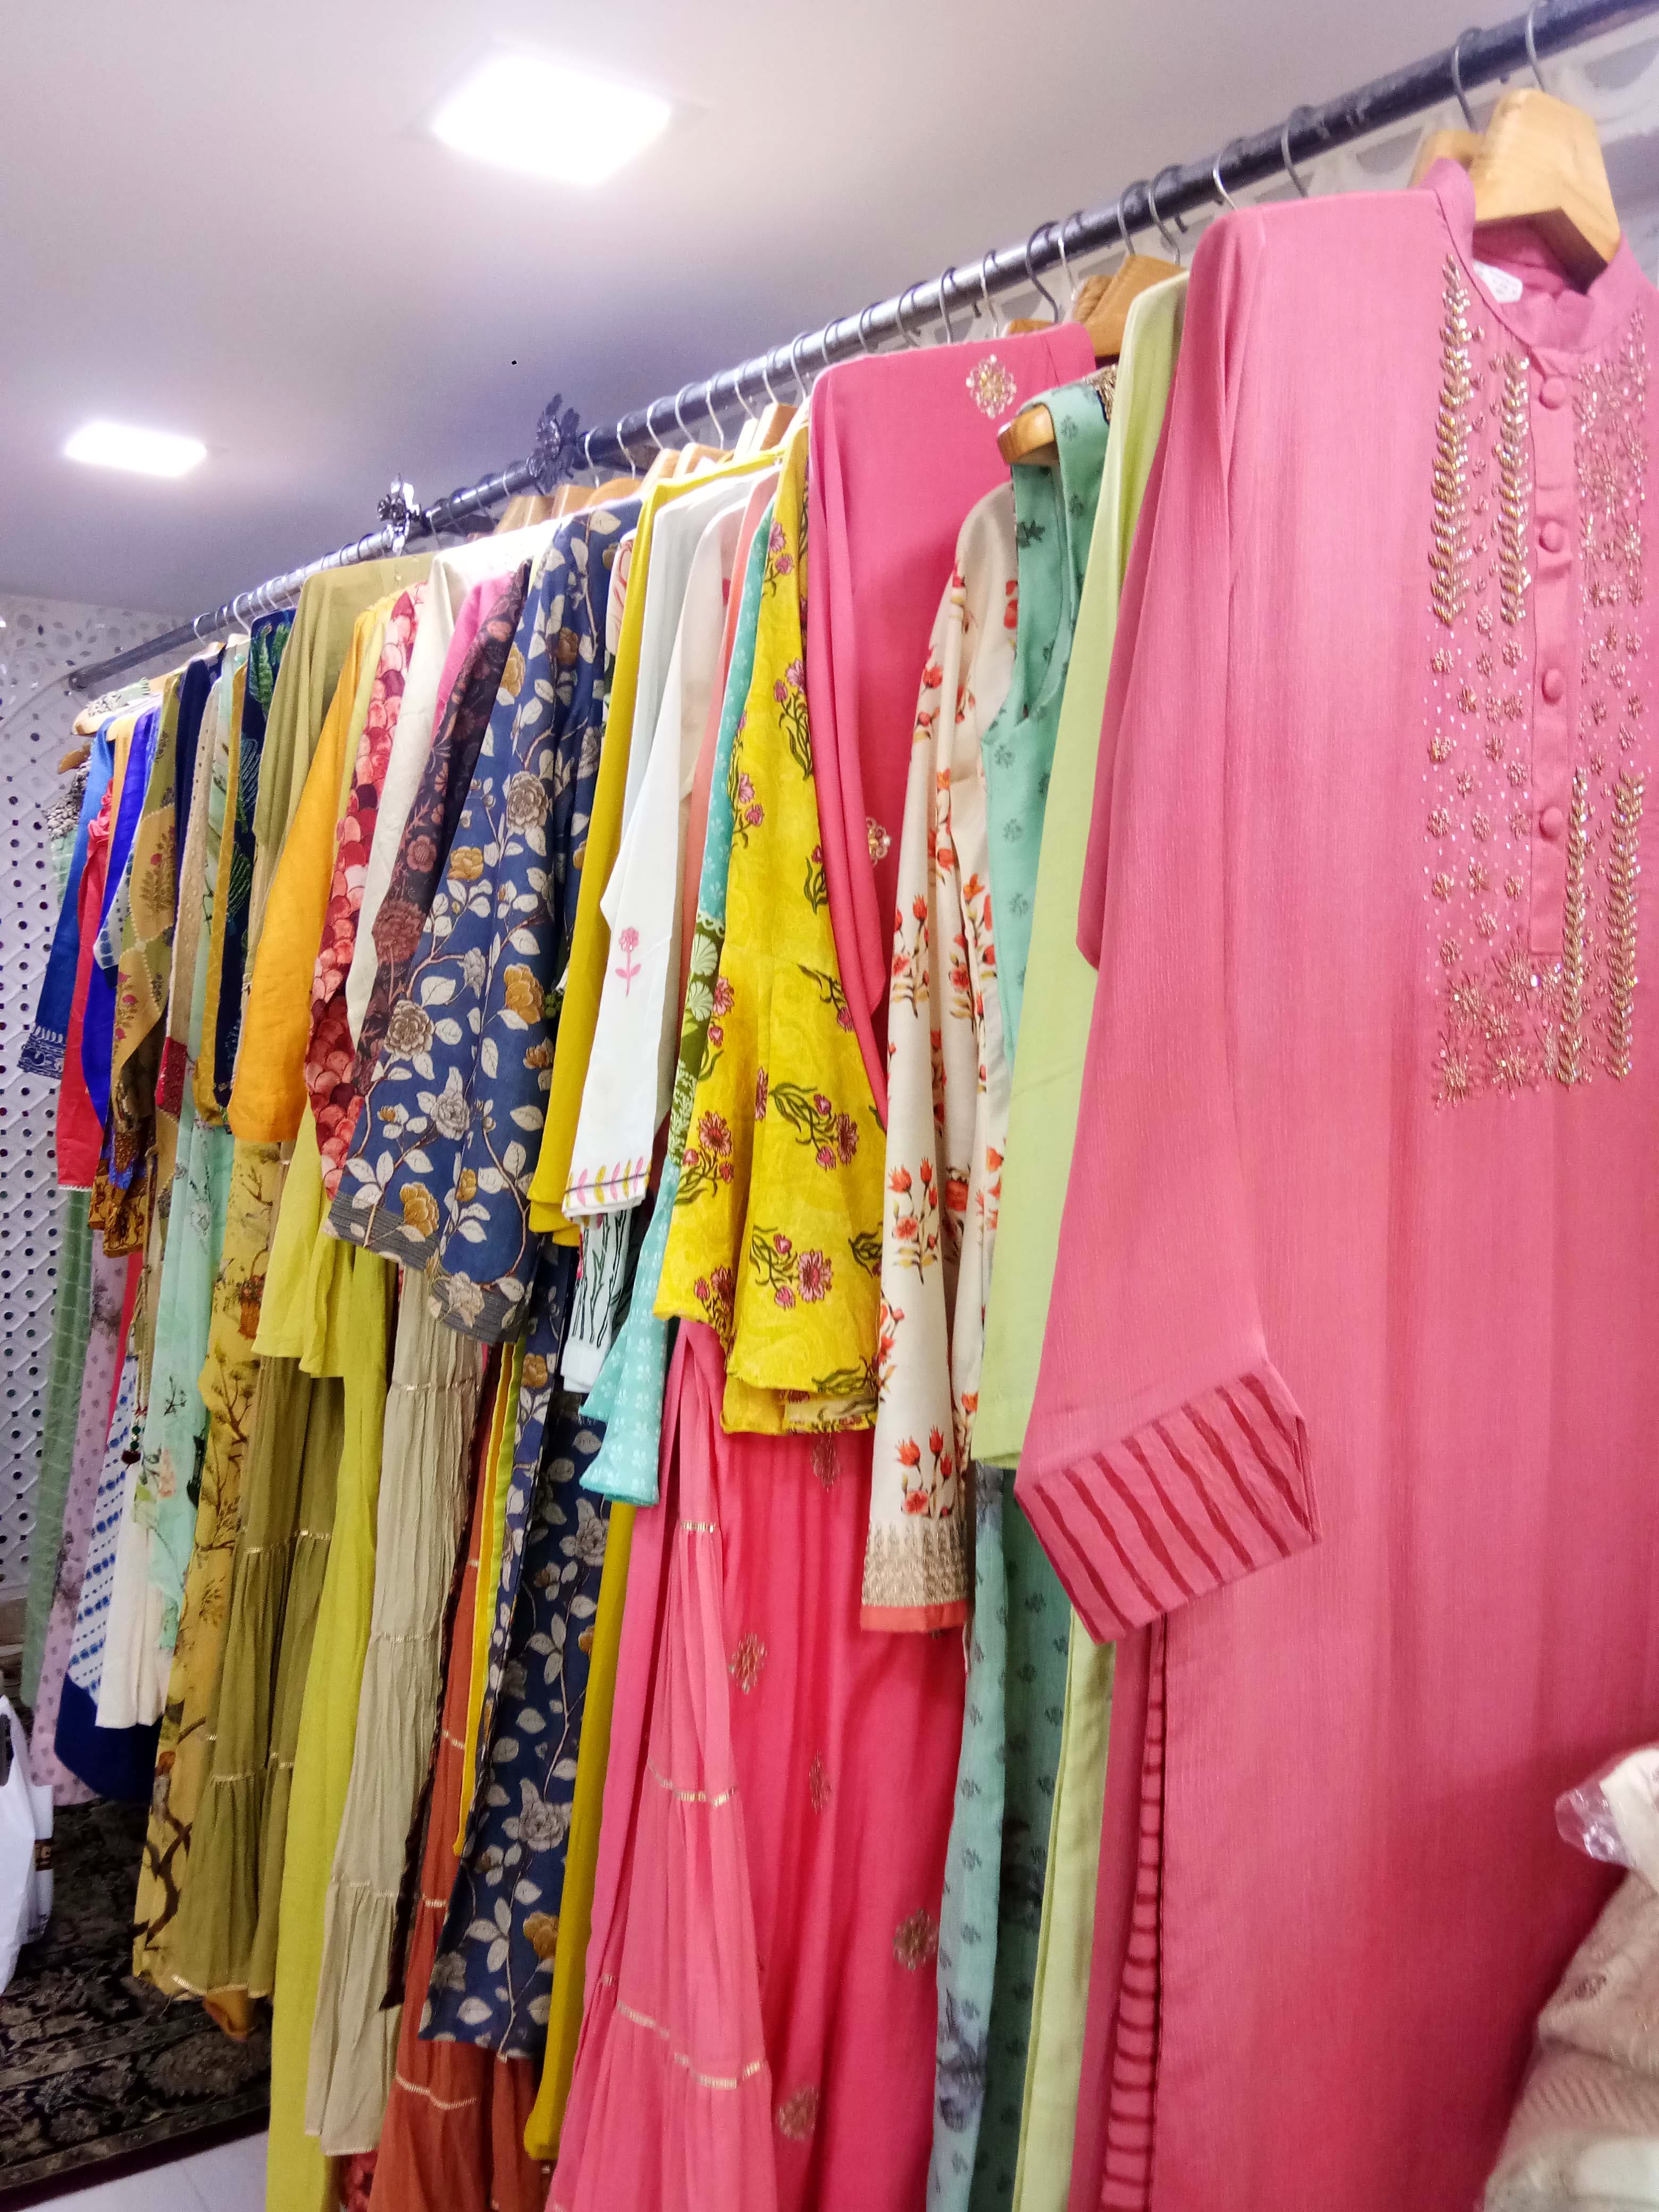 Clothing,Boutique,Room,Pink,Textile,Clothes hanger,Furniture,Dress,Magenta,Closet